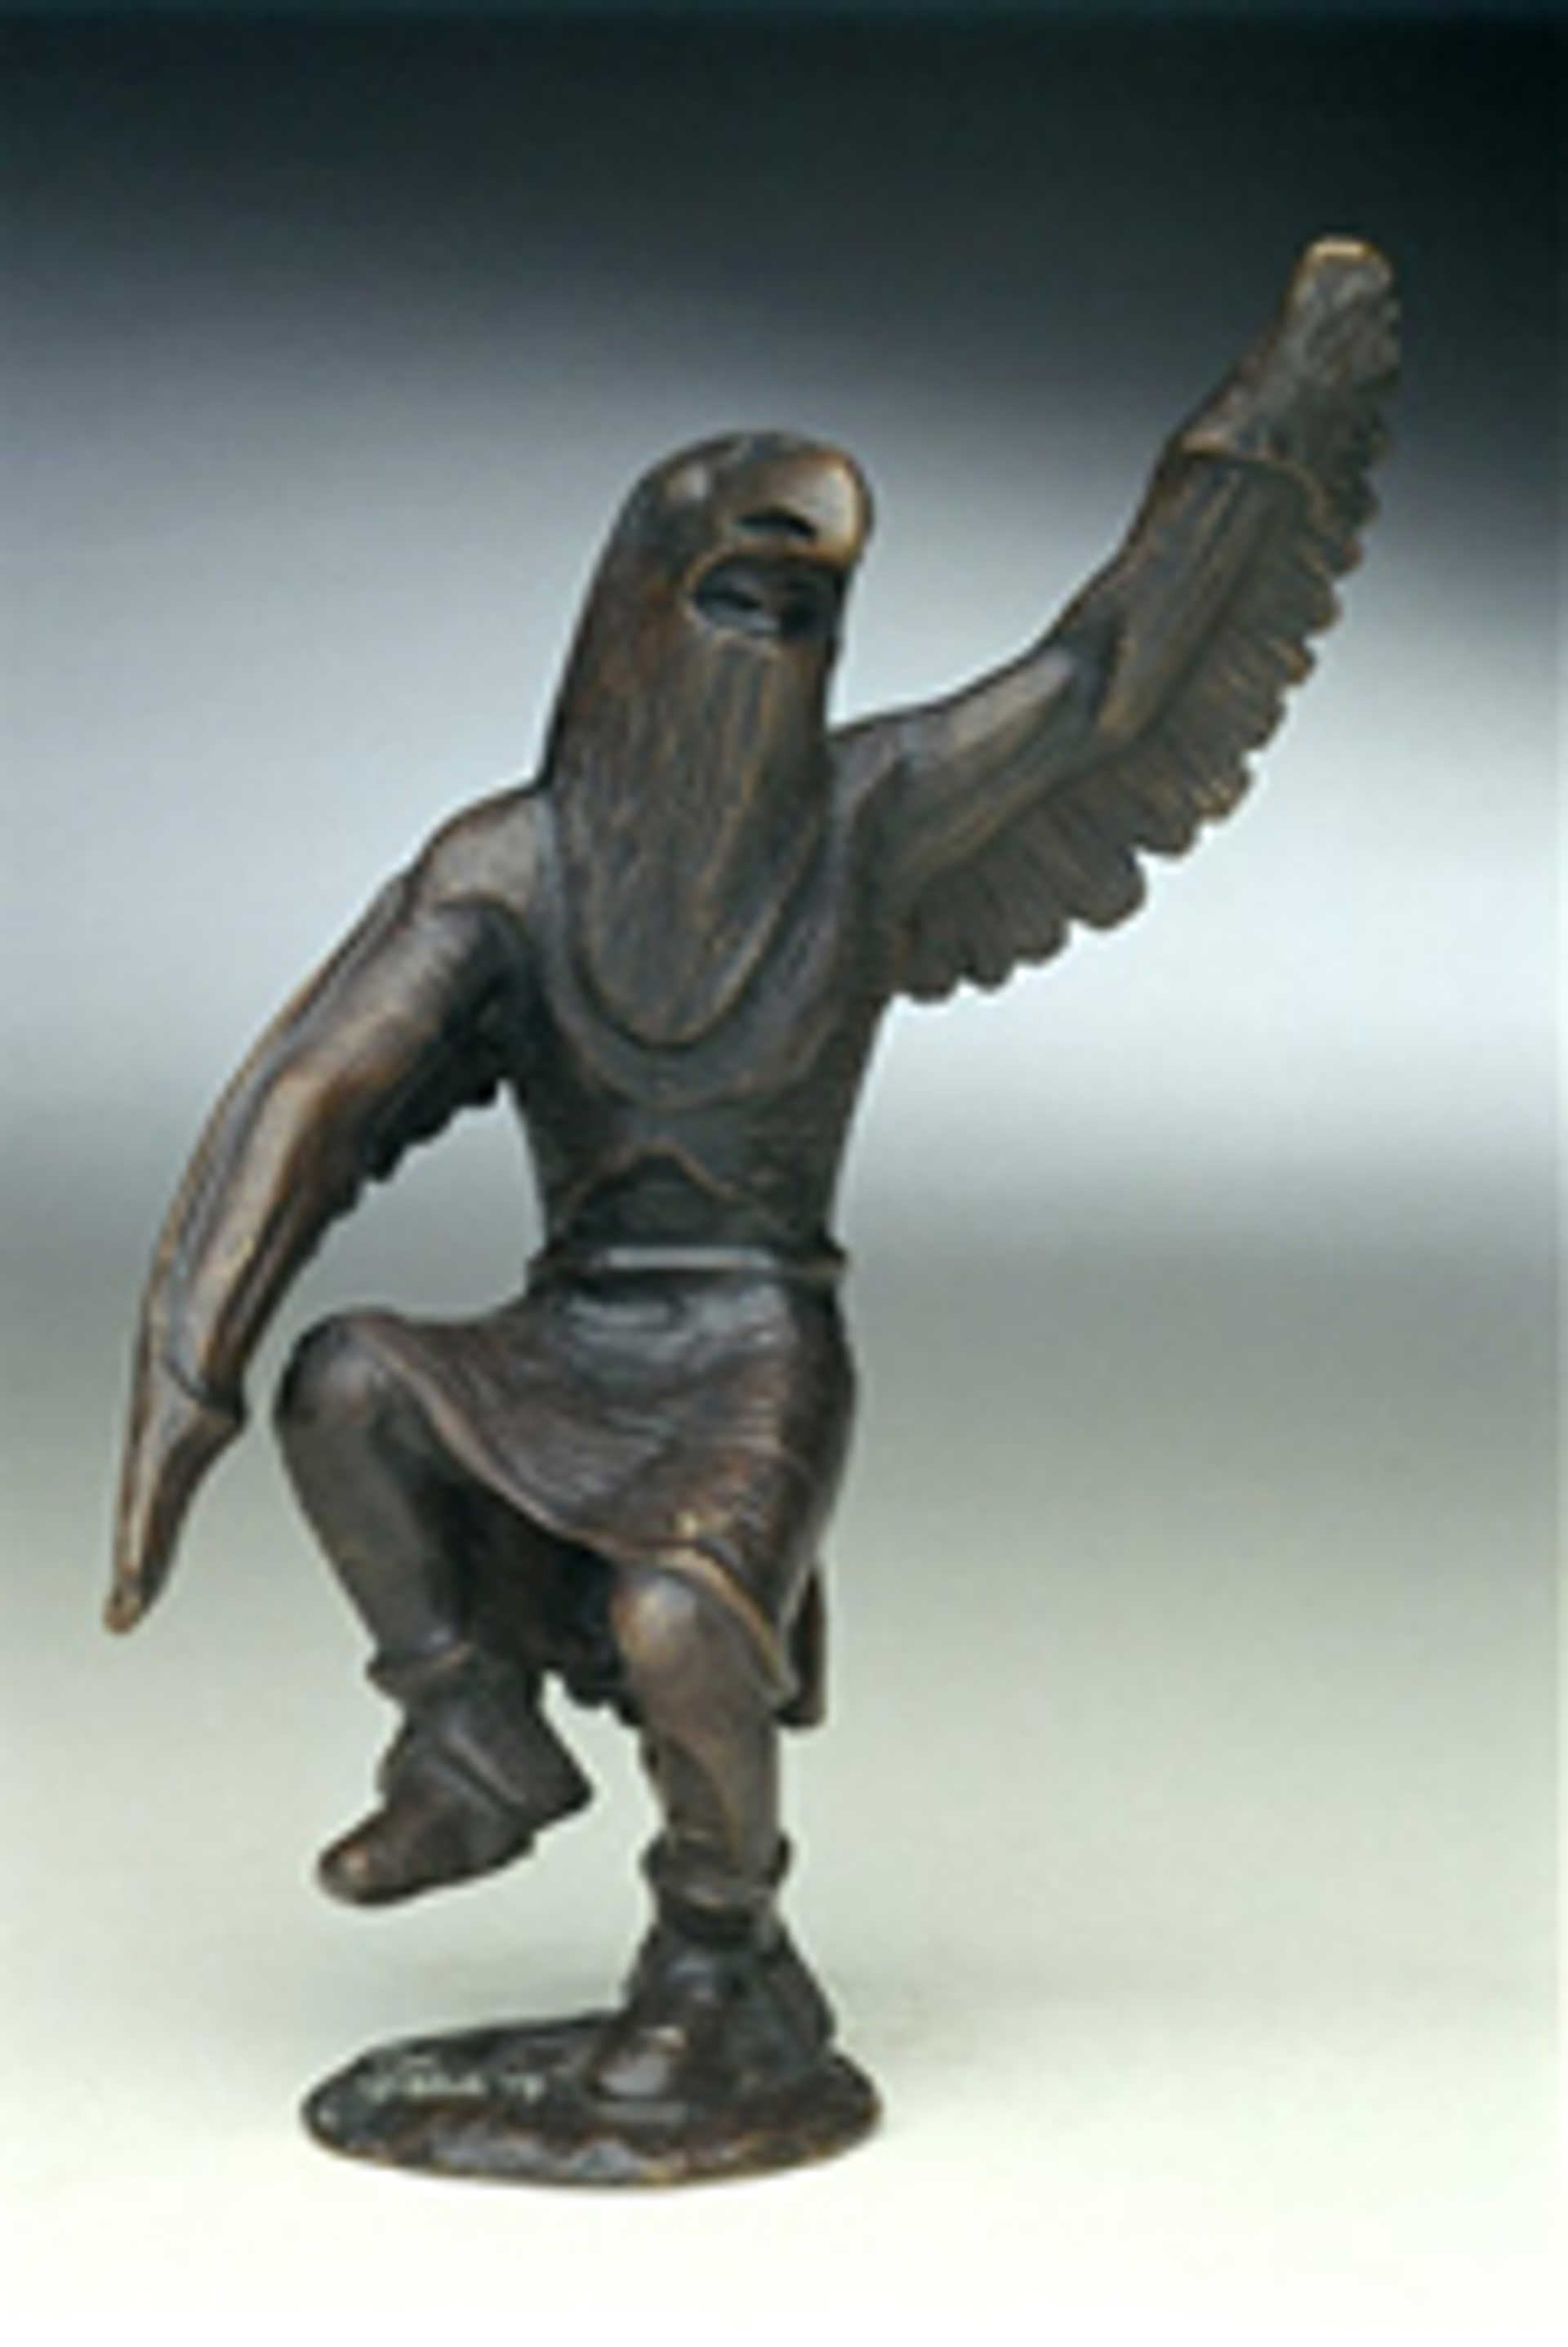 Eagle Dancer by Allan Houser